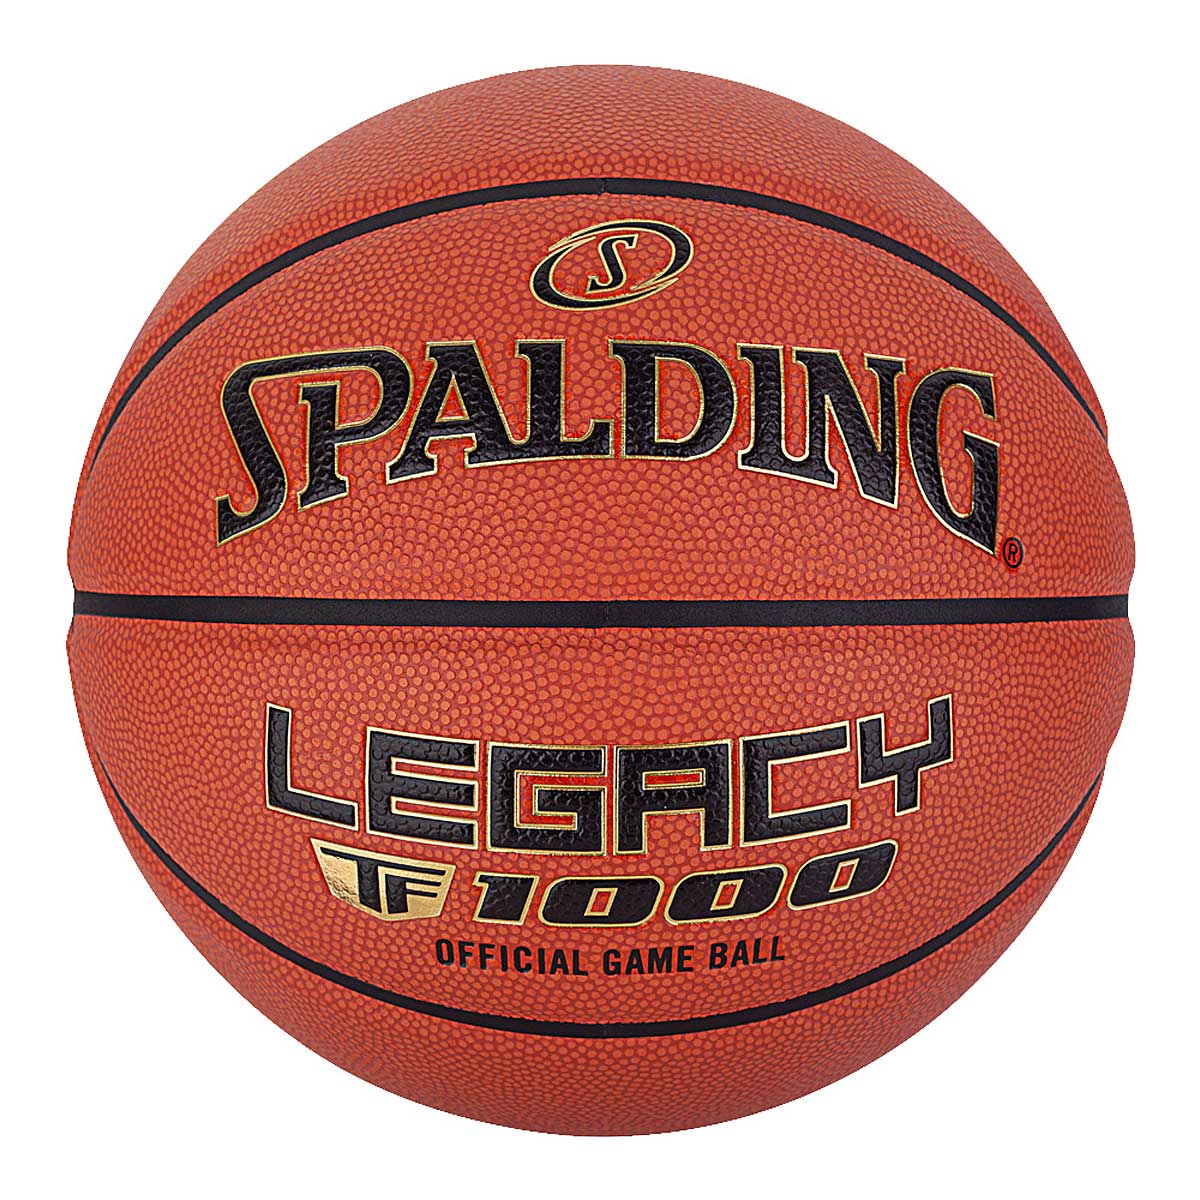 Spalding Tf-1000 Legacy Composite Basketball, Orange